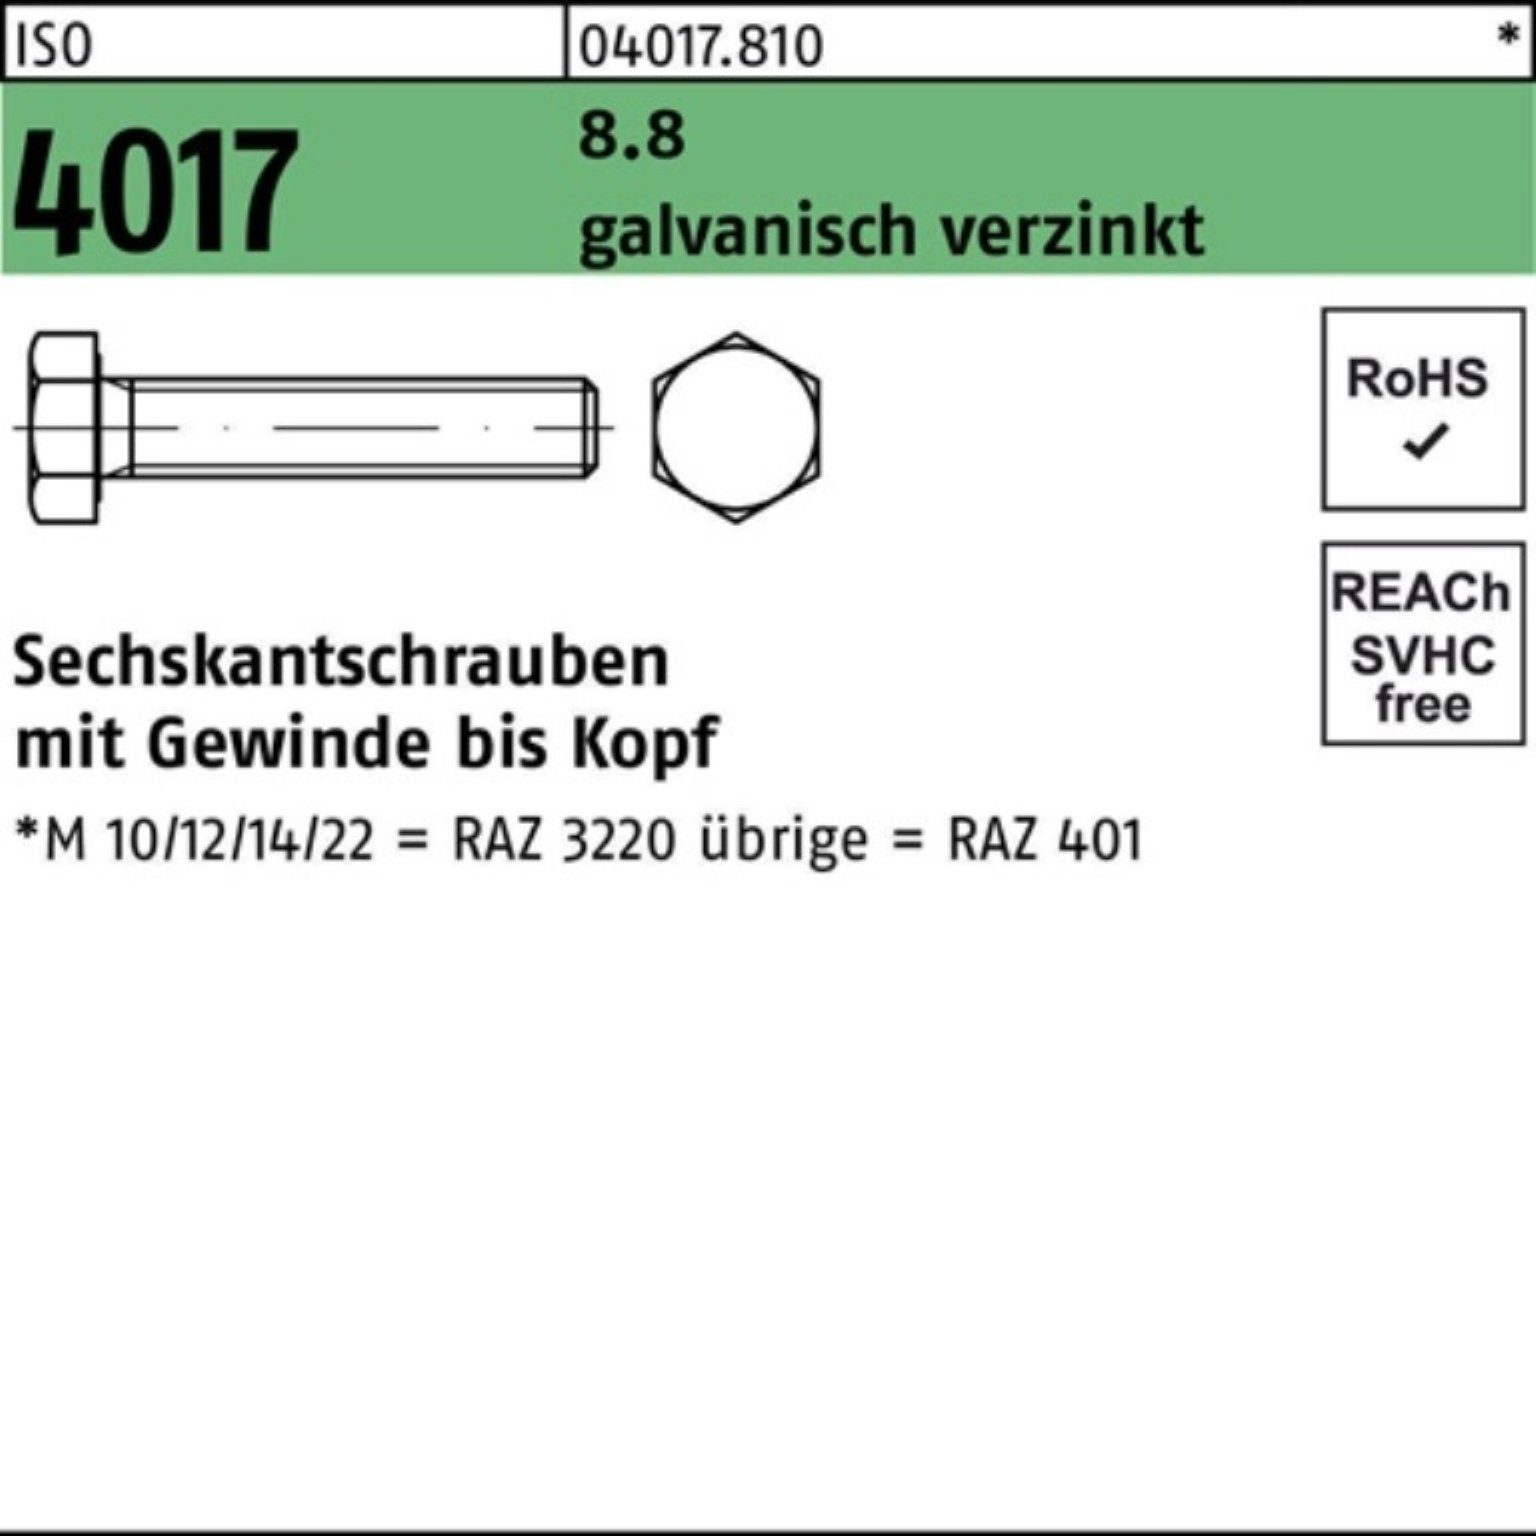 Bufab Sechskantschraube 100er 8.8 ISO 1 St Sechskantschraube M30x Pack 4017 VG 280 galv.verz